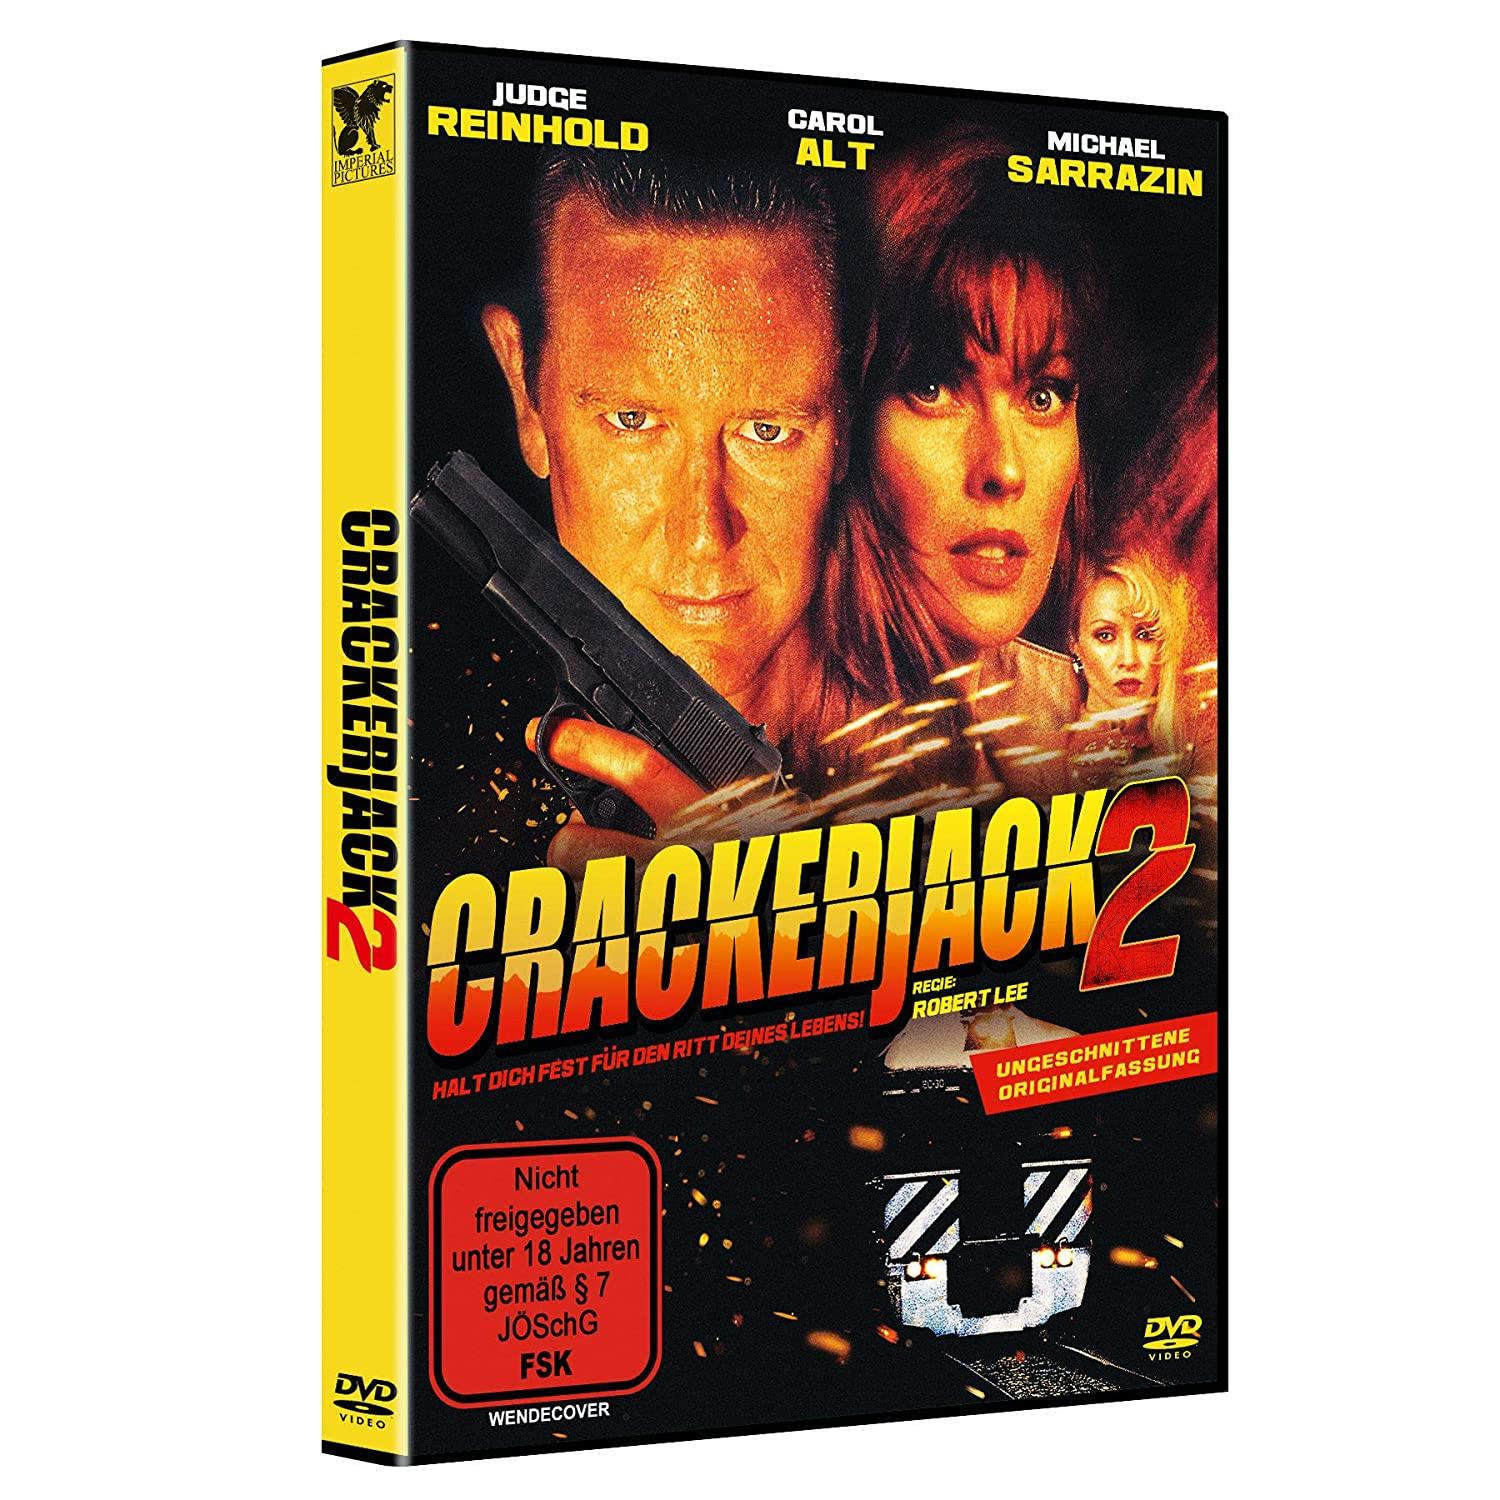 DVD 2 Crackerjack